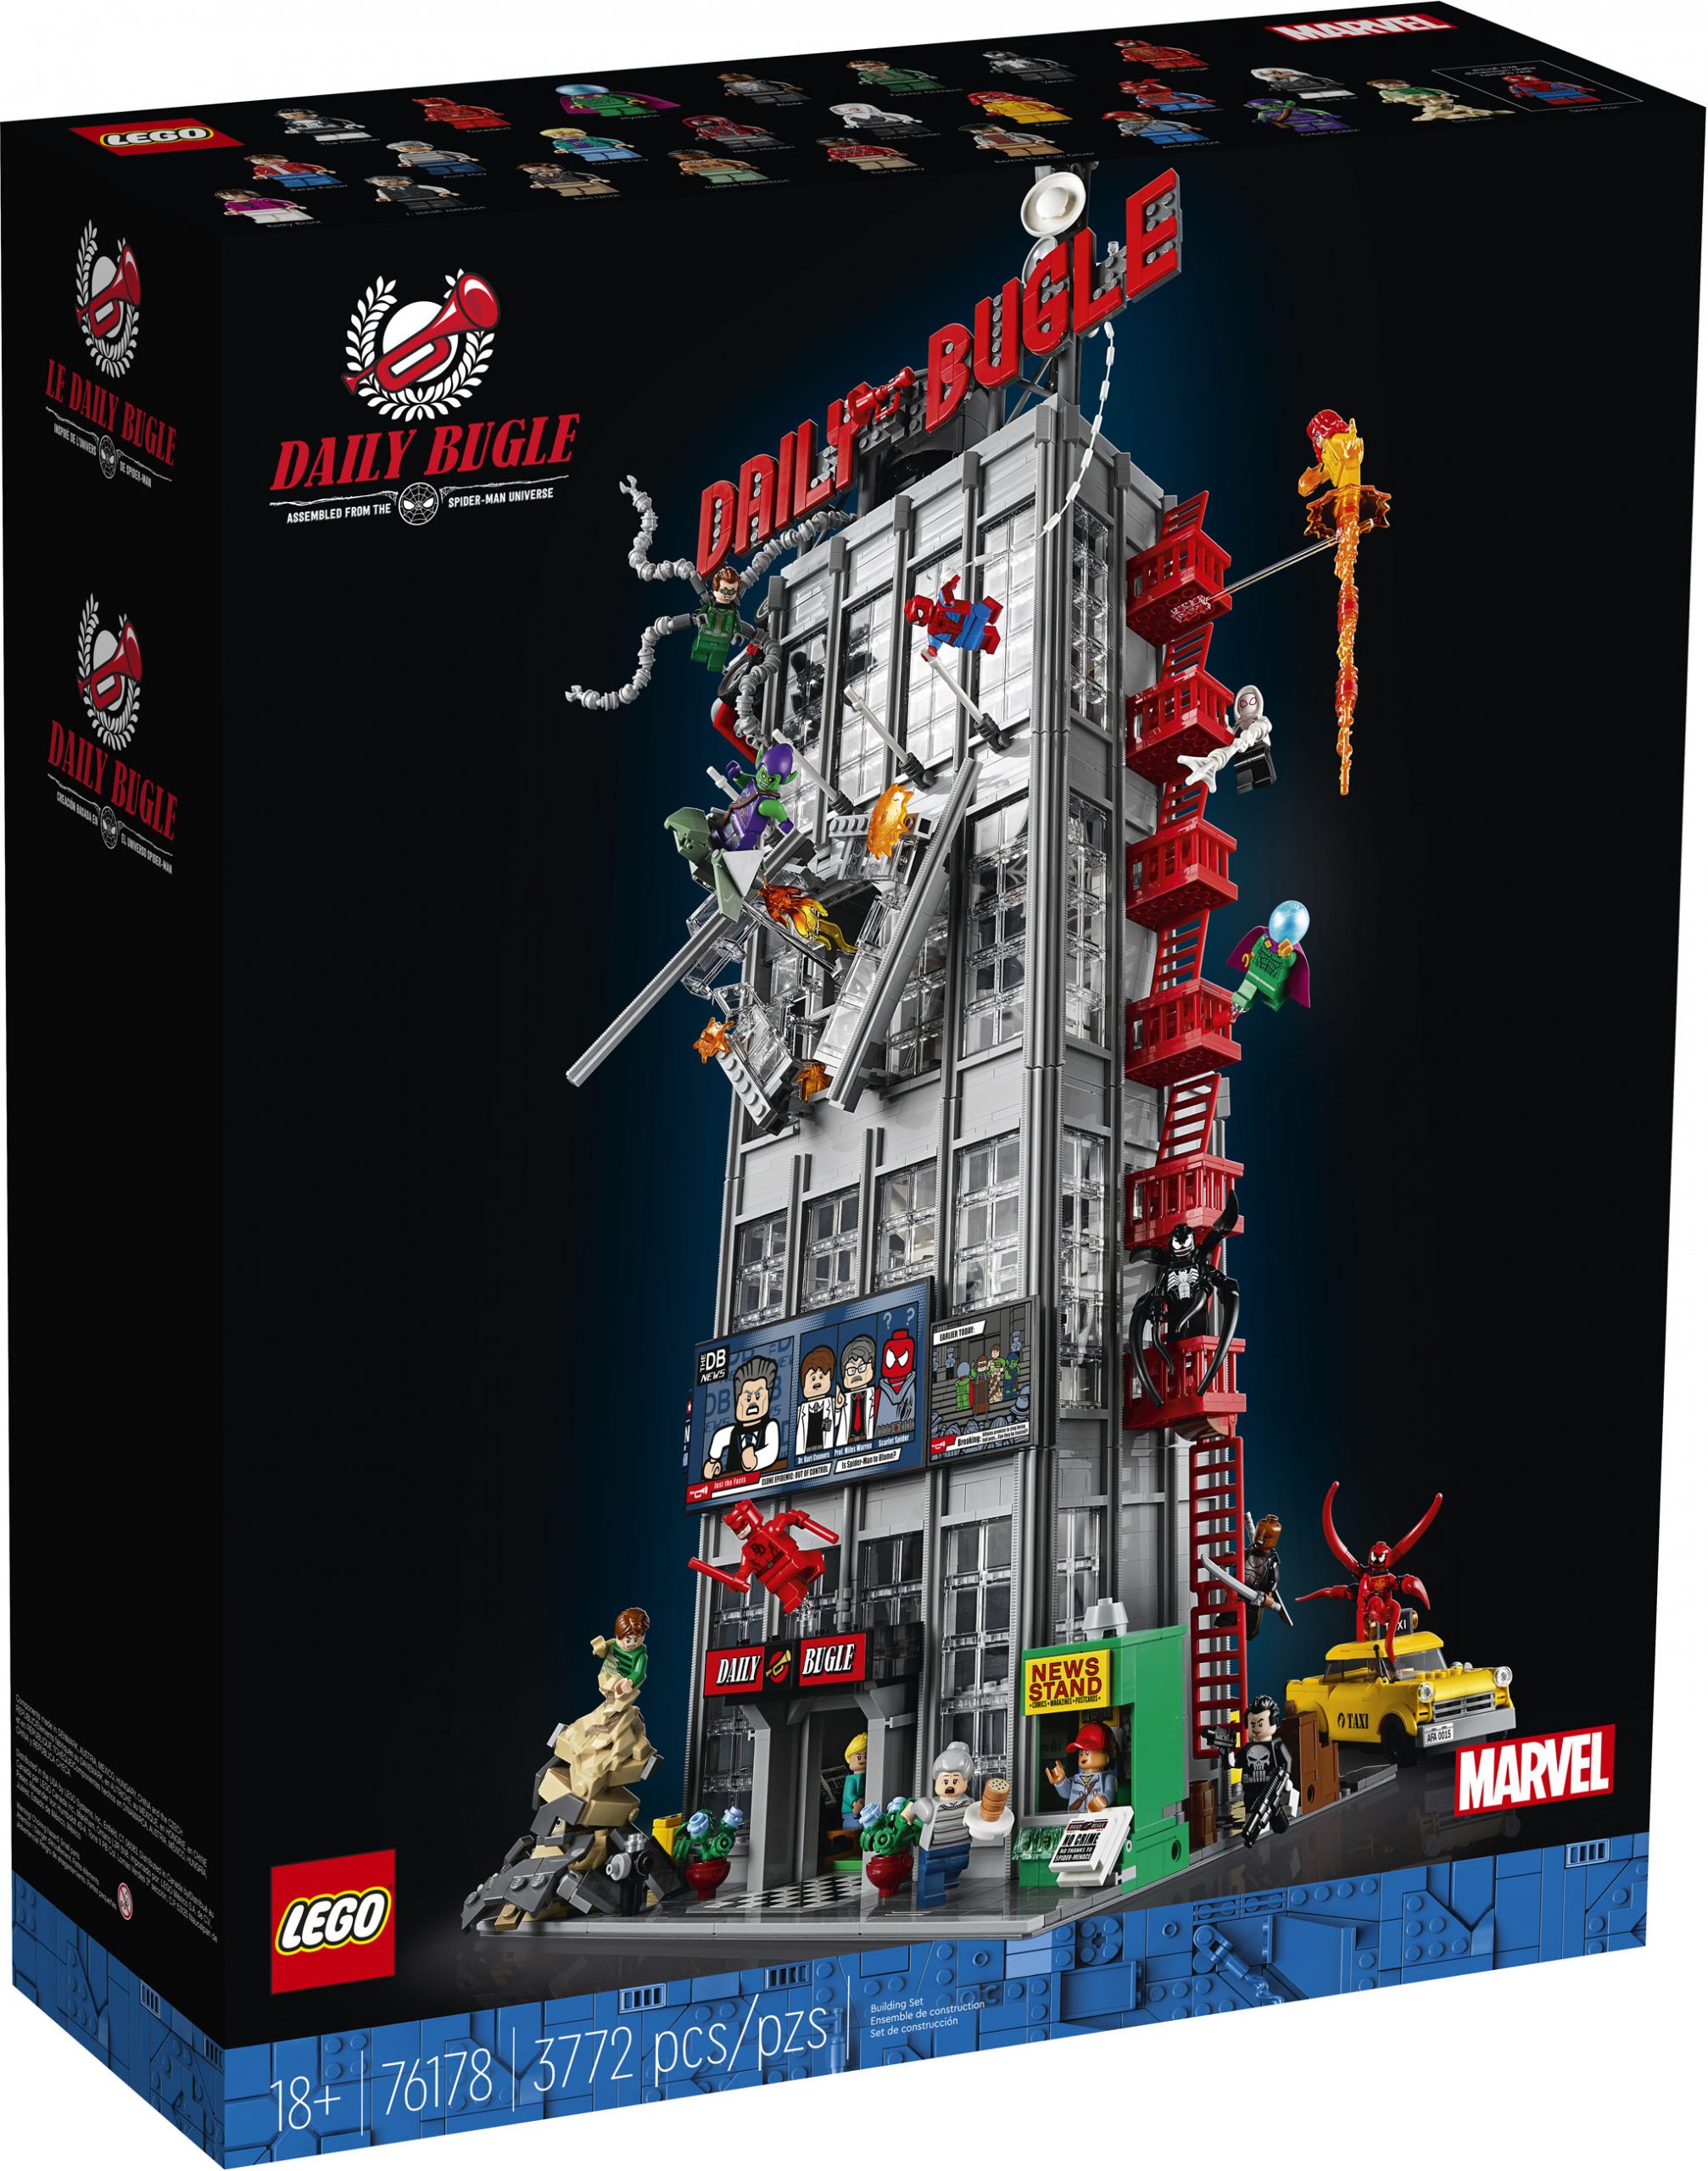 LEGO Marvel Super Heroes Daily Bugle (76178)